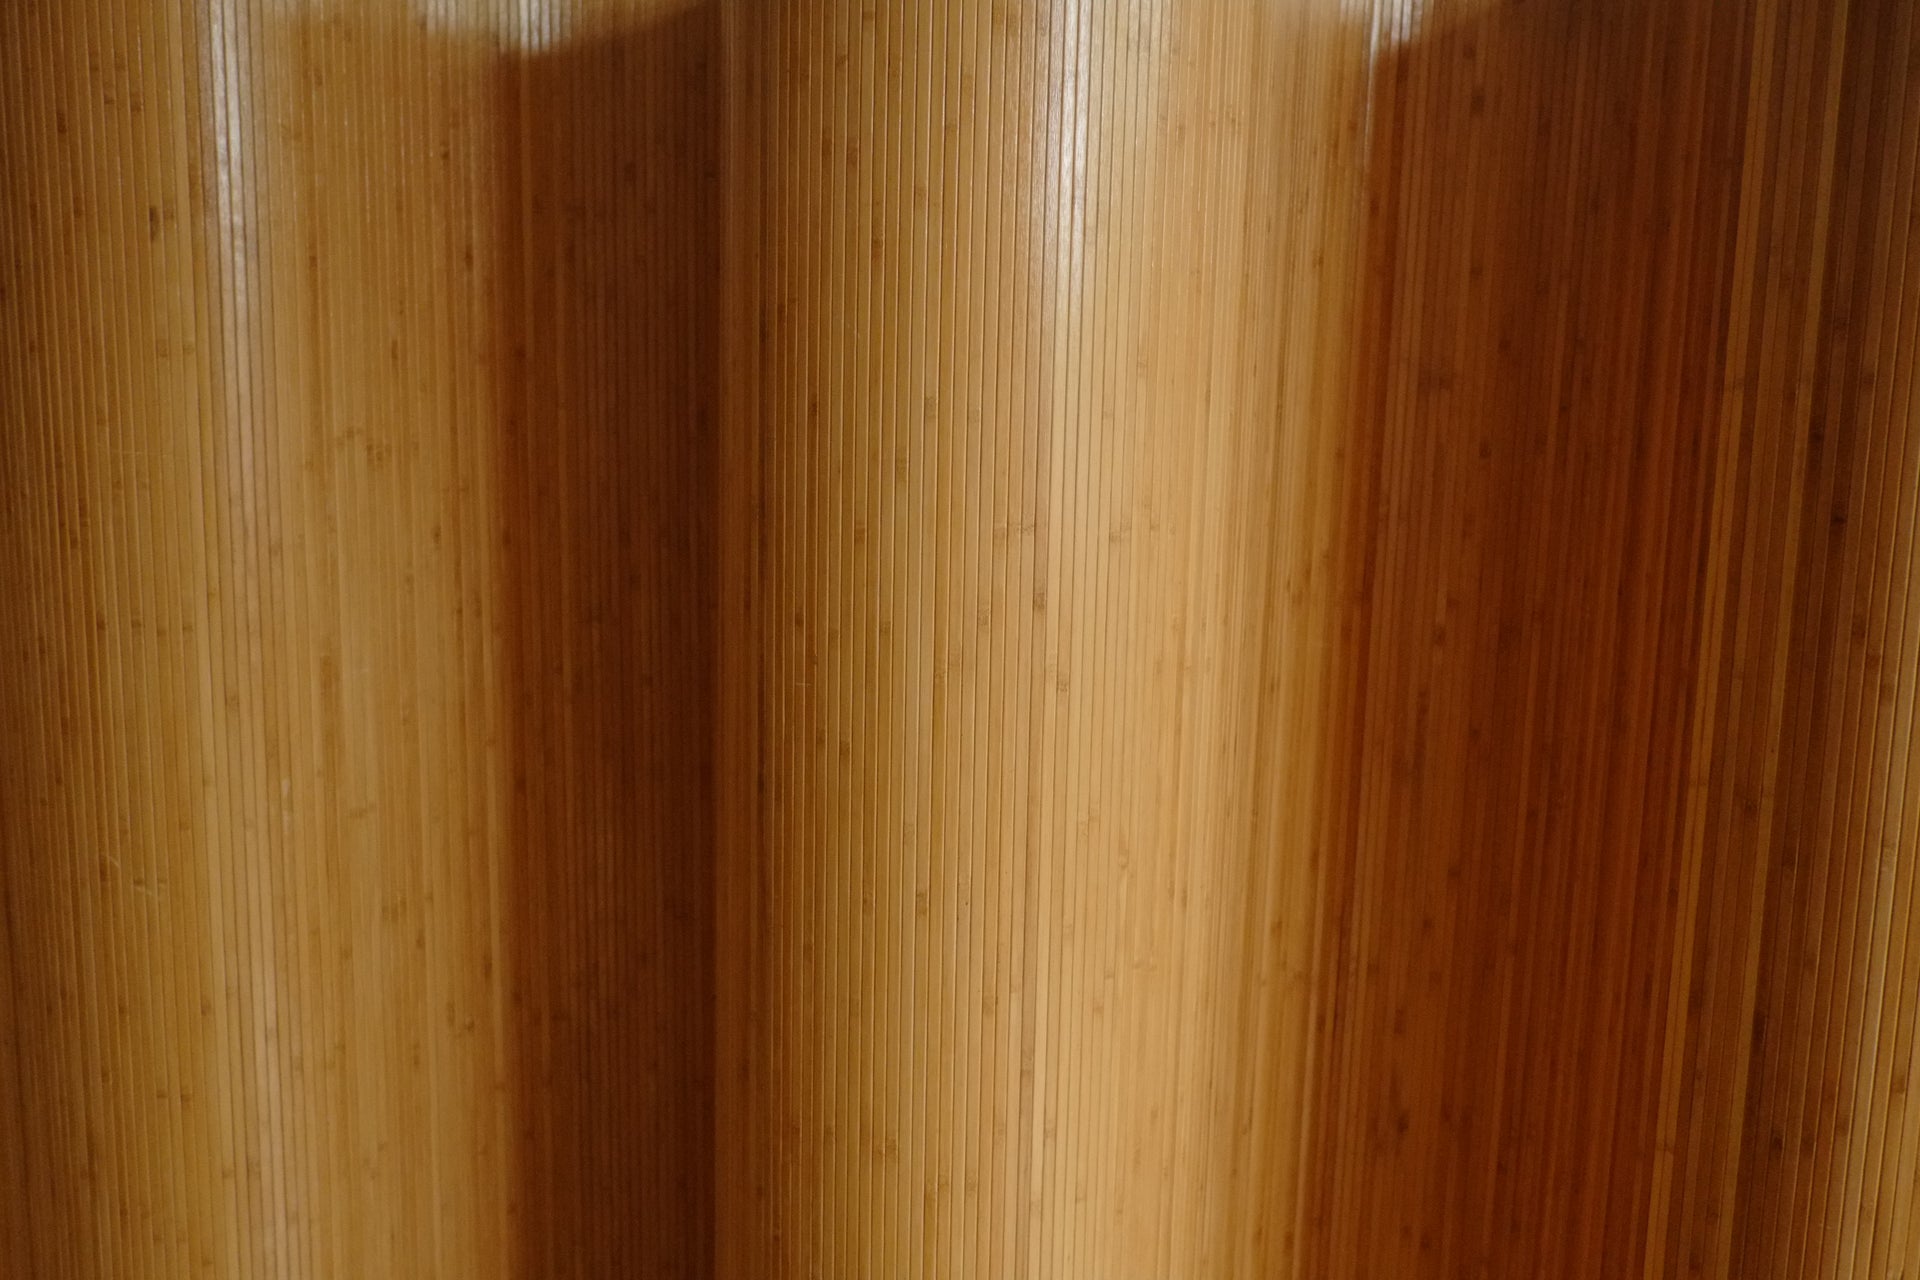 Bamboo Room Divider in NATURAL